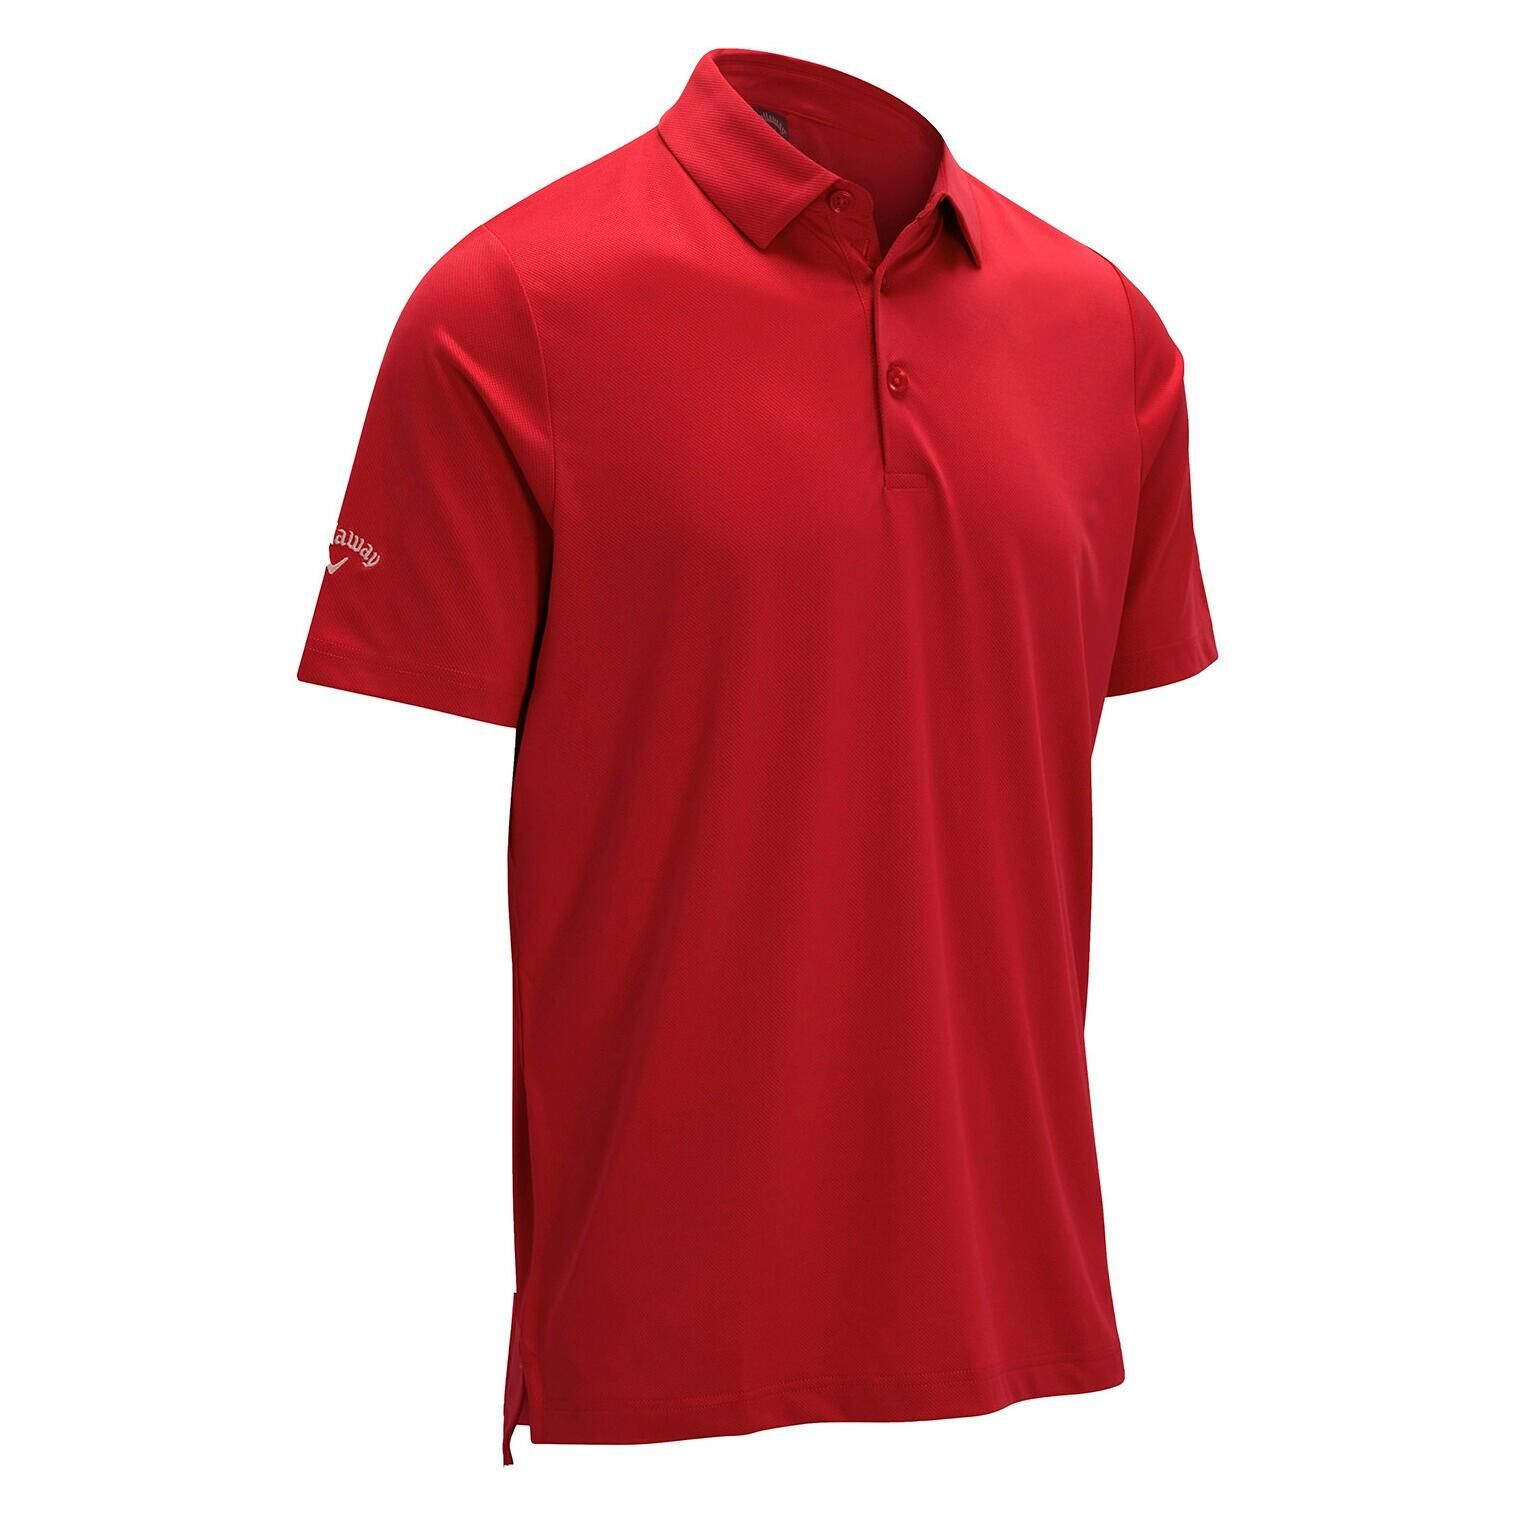 CALLAWAY Mens Solid Swing Tech Polo Shirt (True Red)